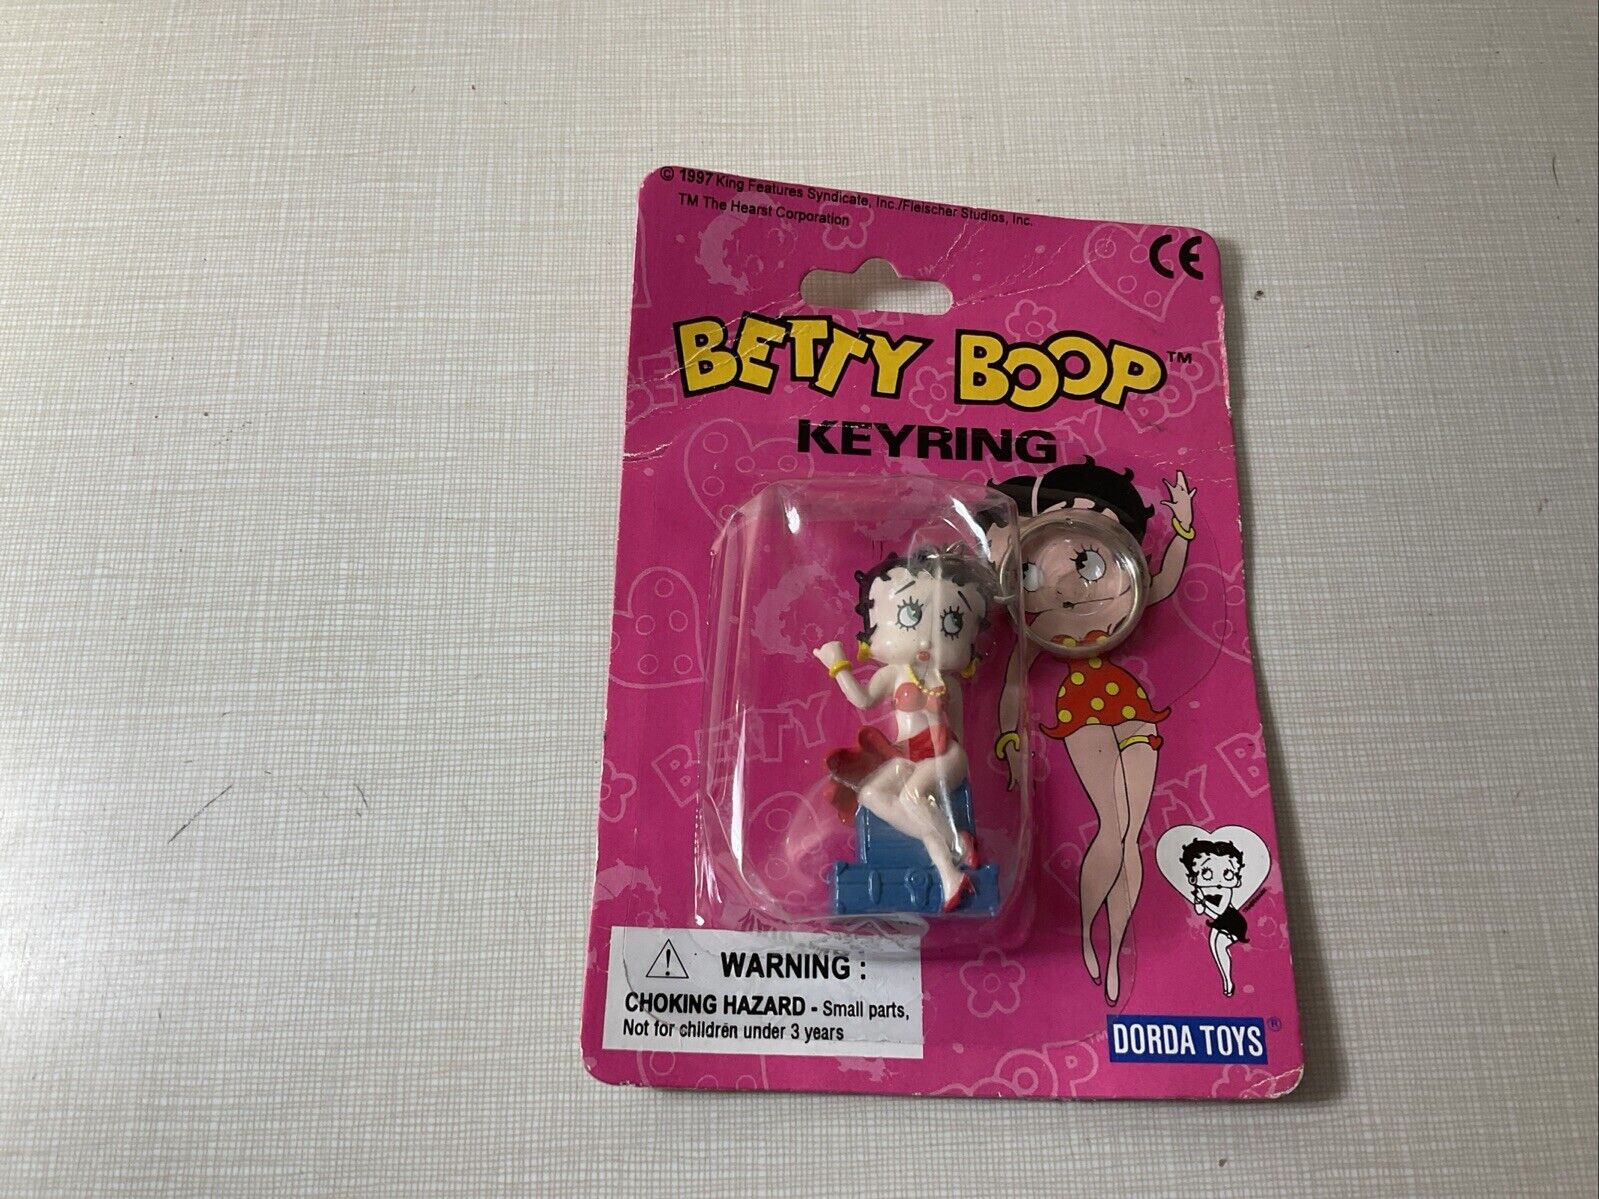 Betty Boop Keyring, 1997 Dorda Toys, Red bikini top and skirt